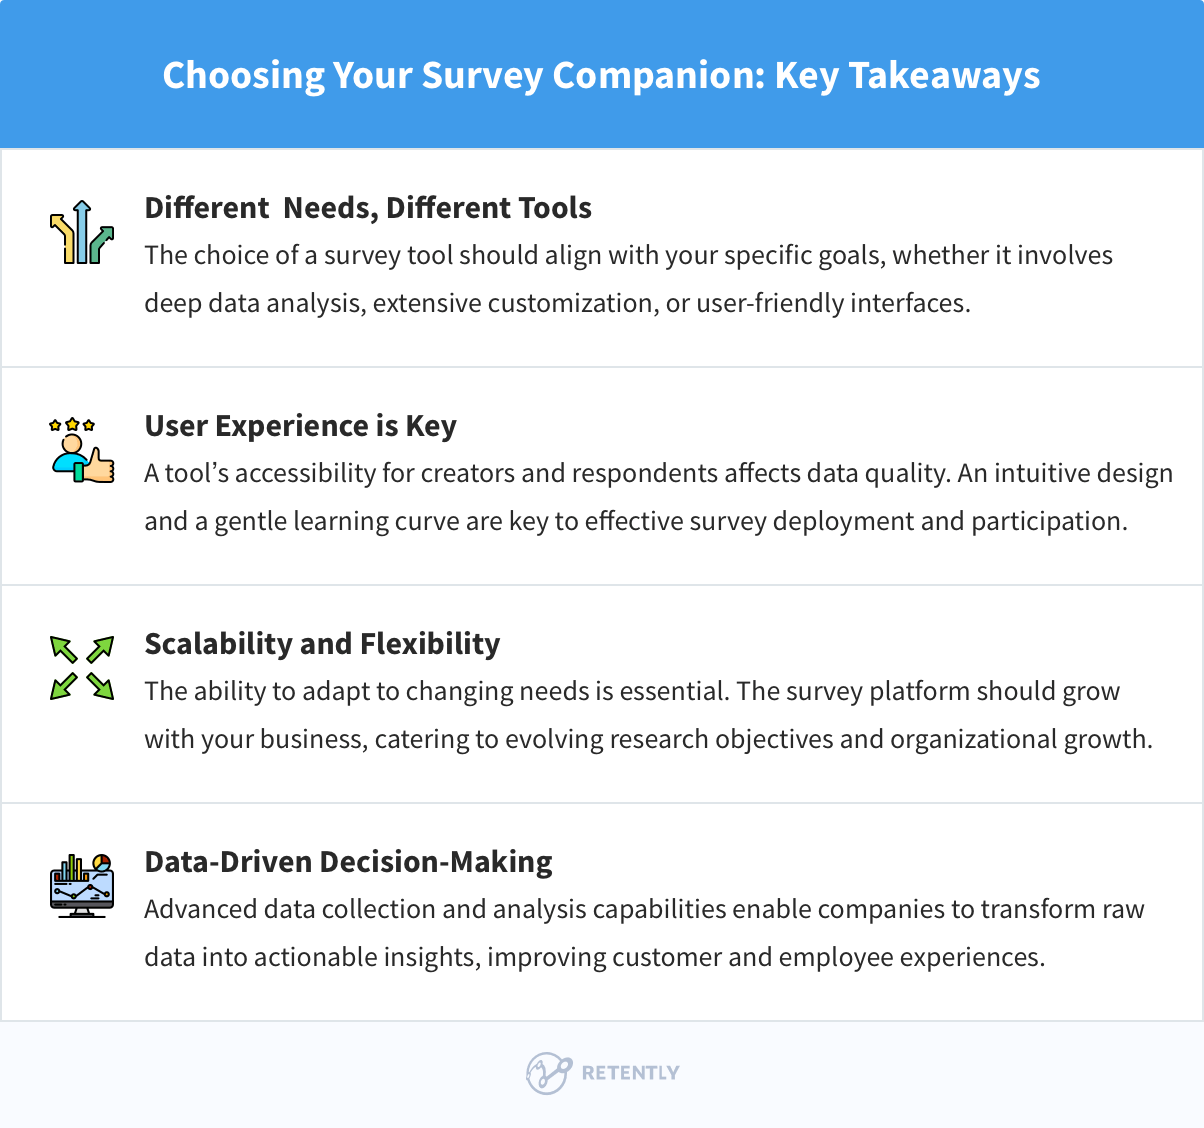 Choosing Your Survey Companion: Key Takeaways